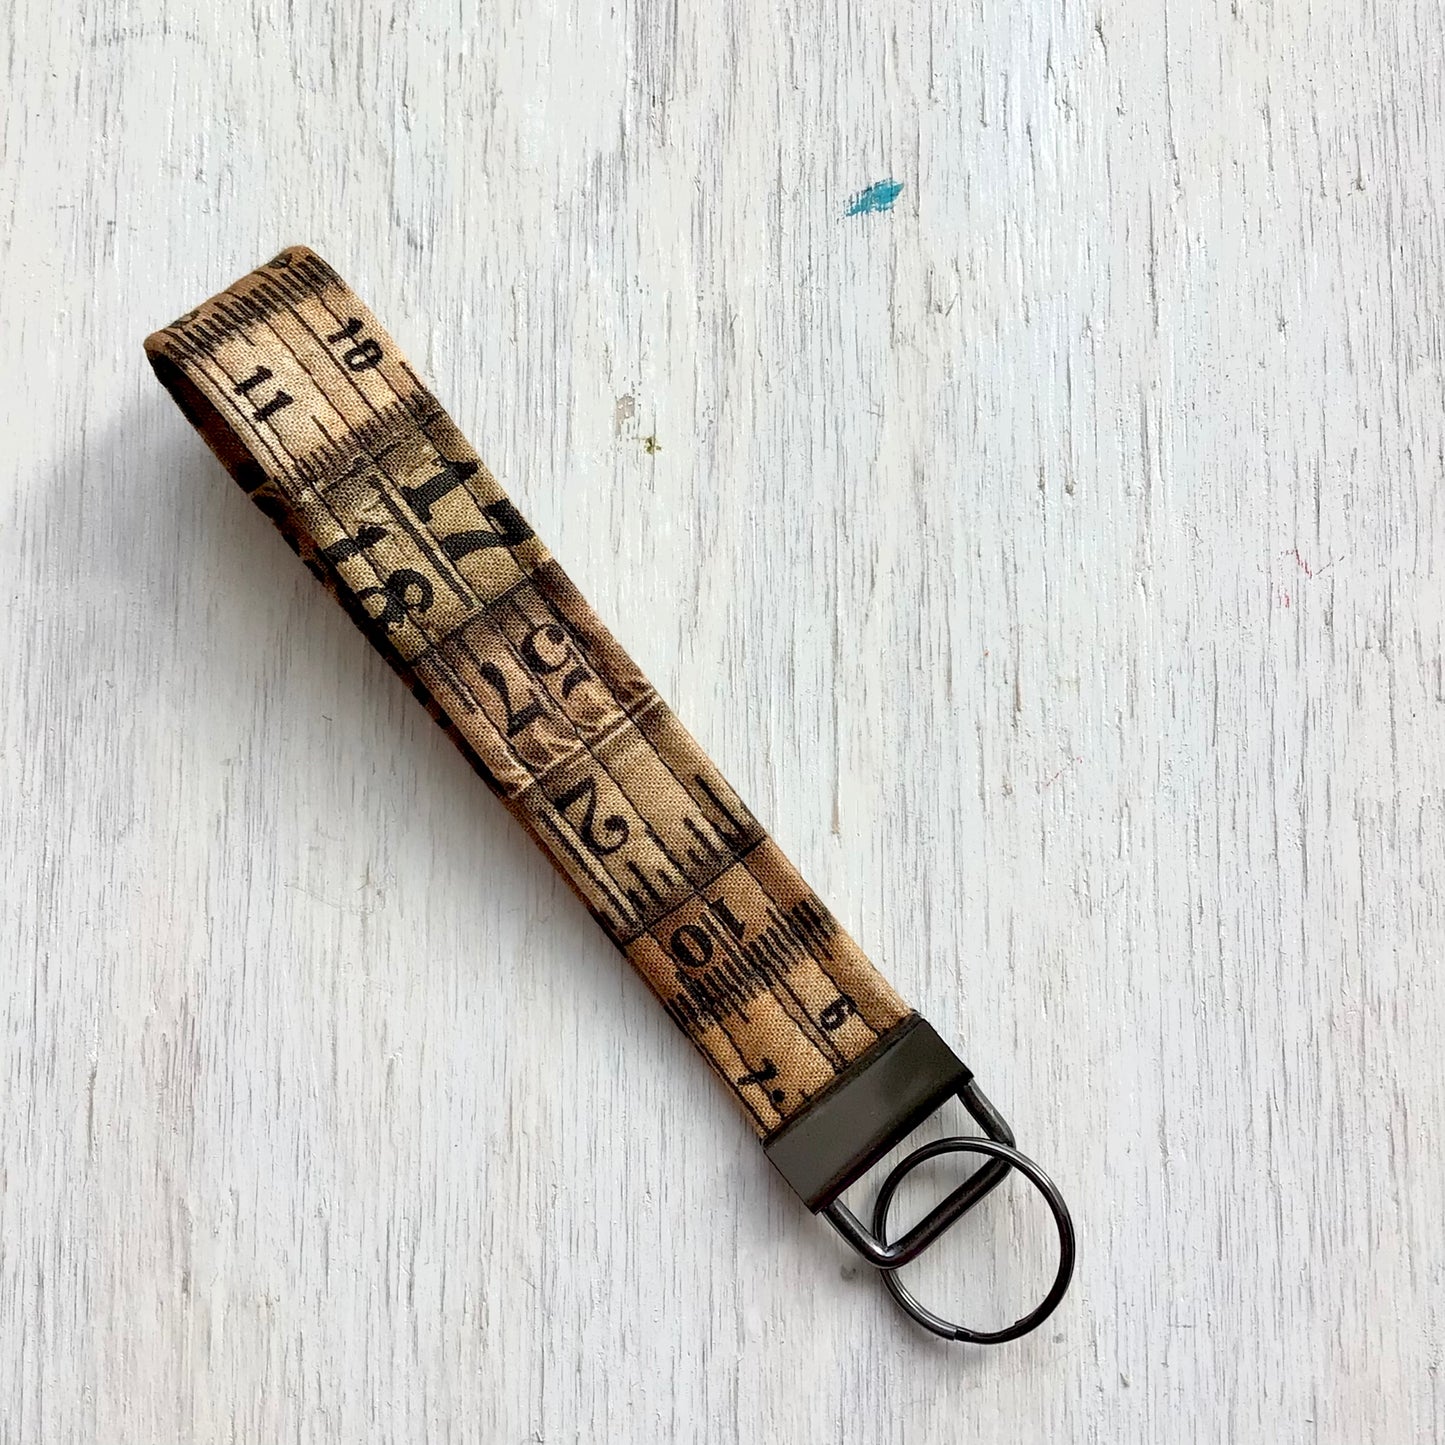 Key Fob - Rustic Measuring Tape Fabric